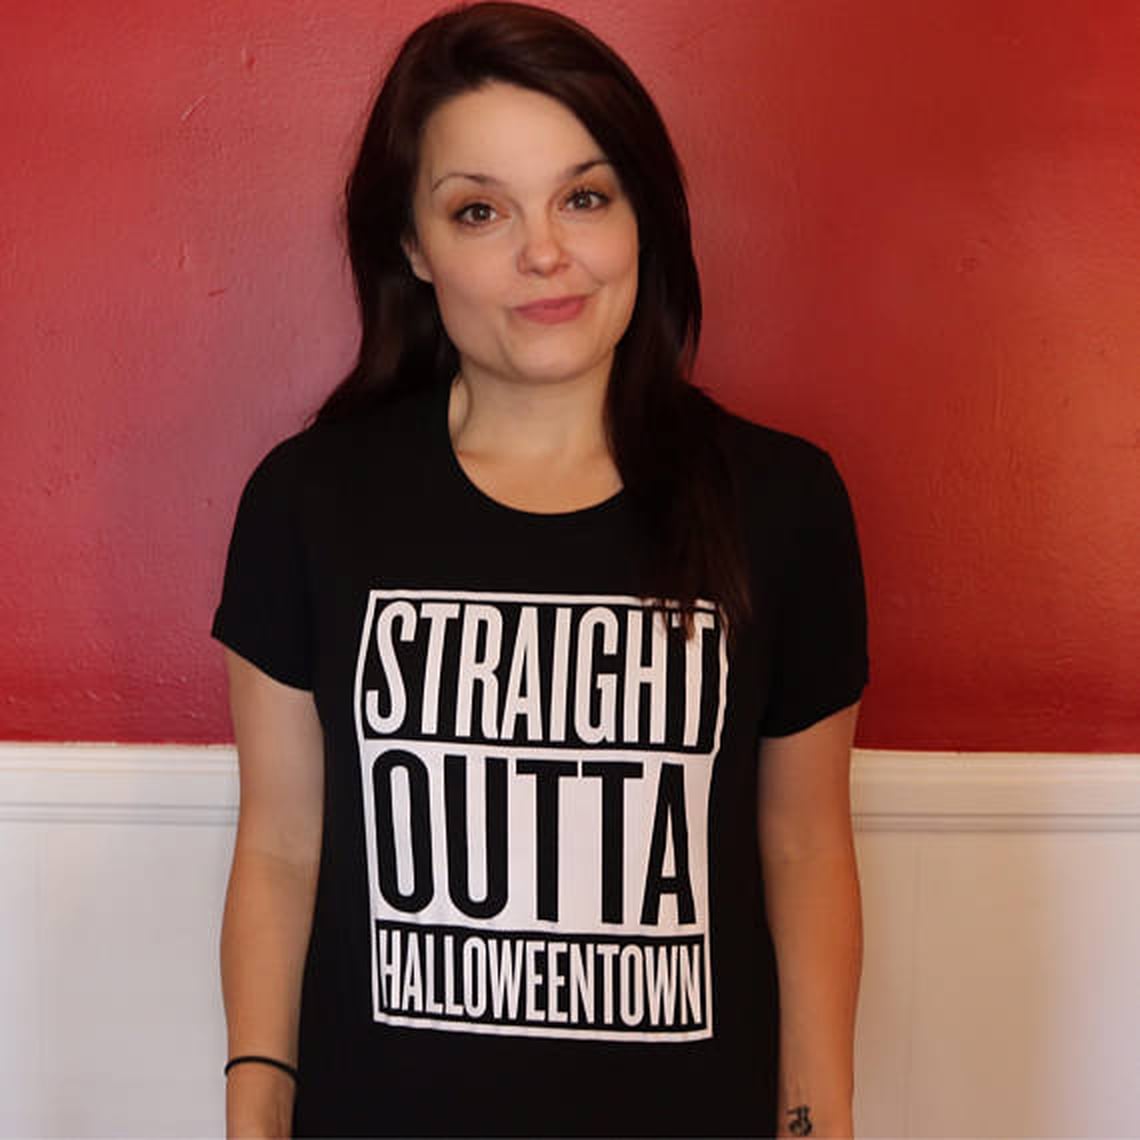 Halloweentown Shirts on Etsy | POPSUGAR Smart Living